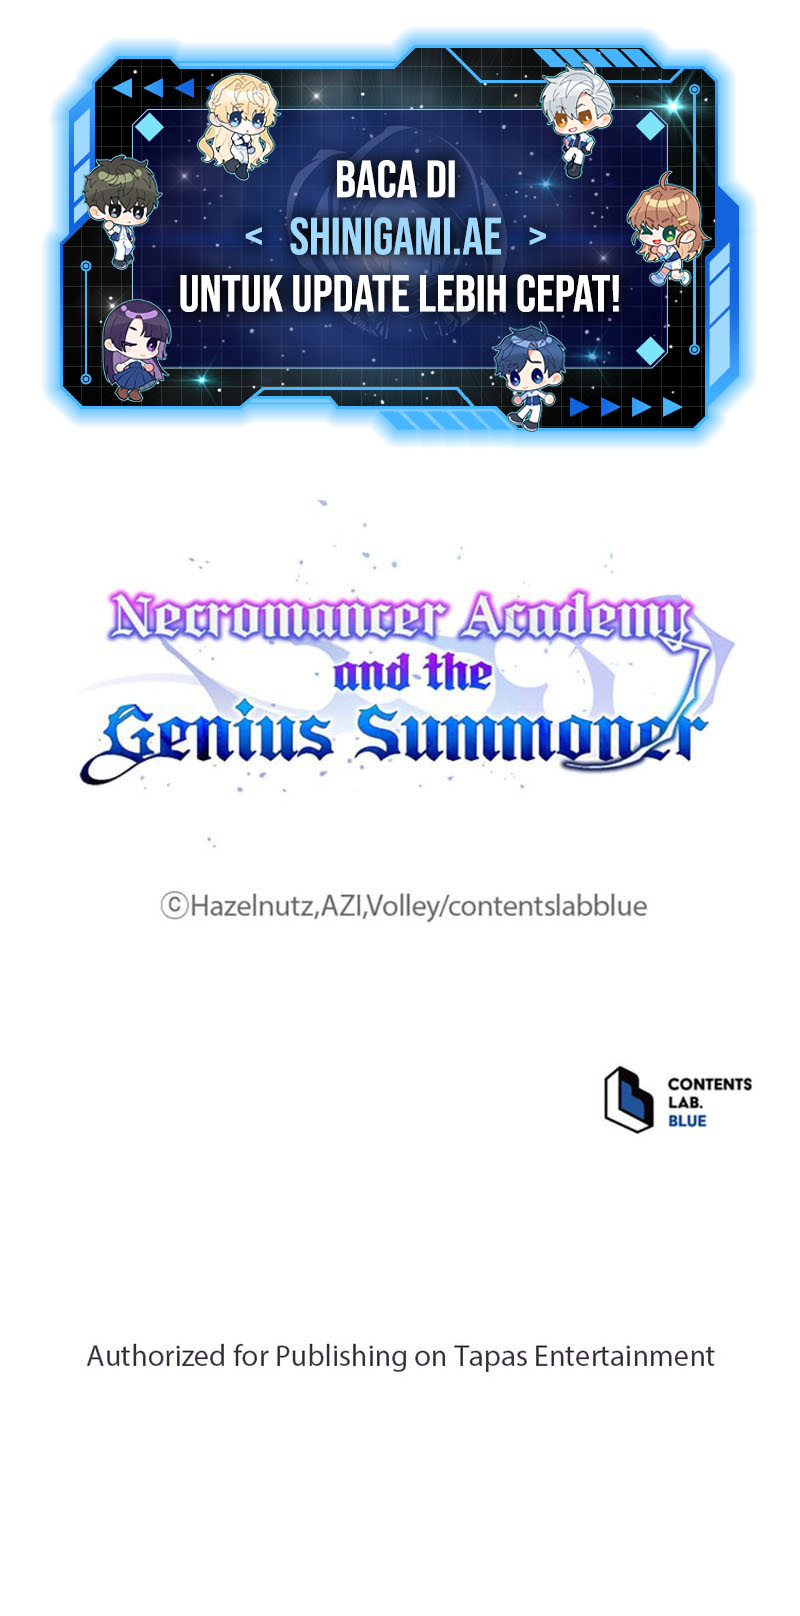 Necromancer Academy’s Genius Summoner Chapter 60